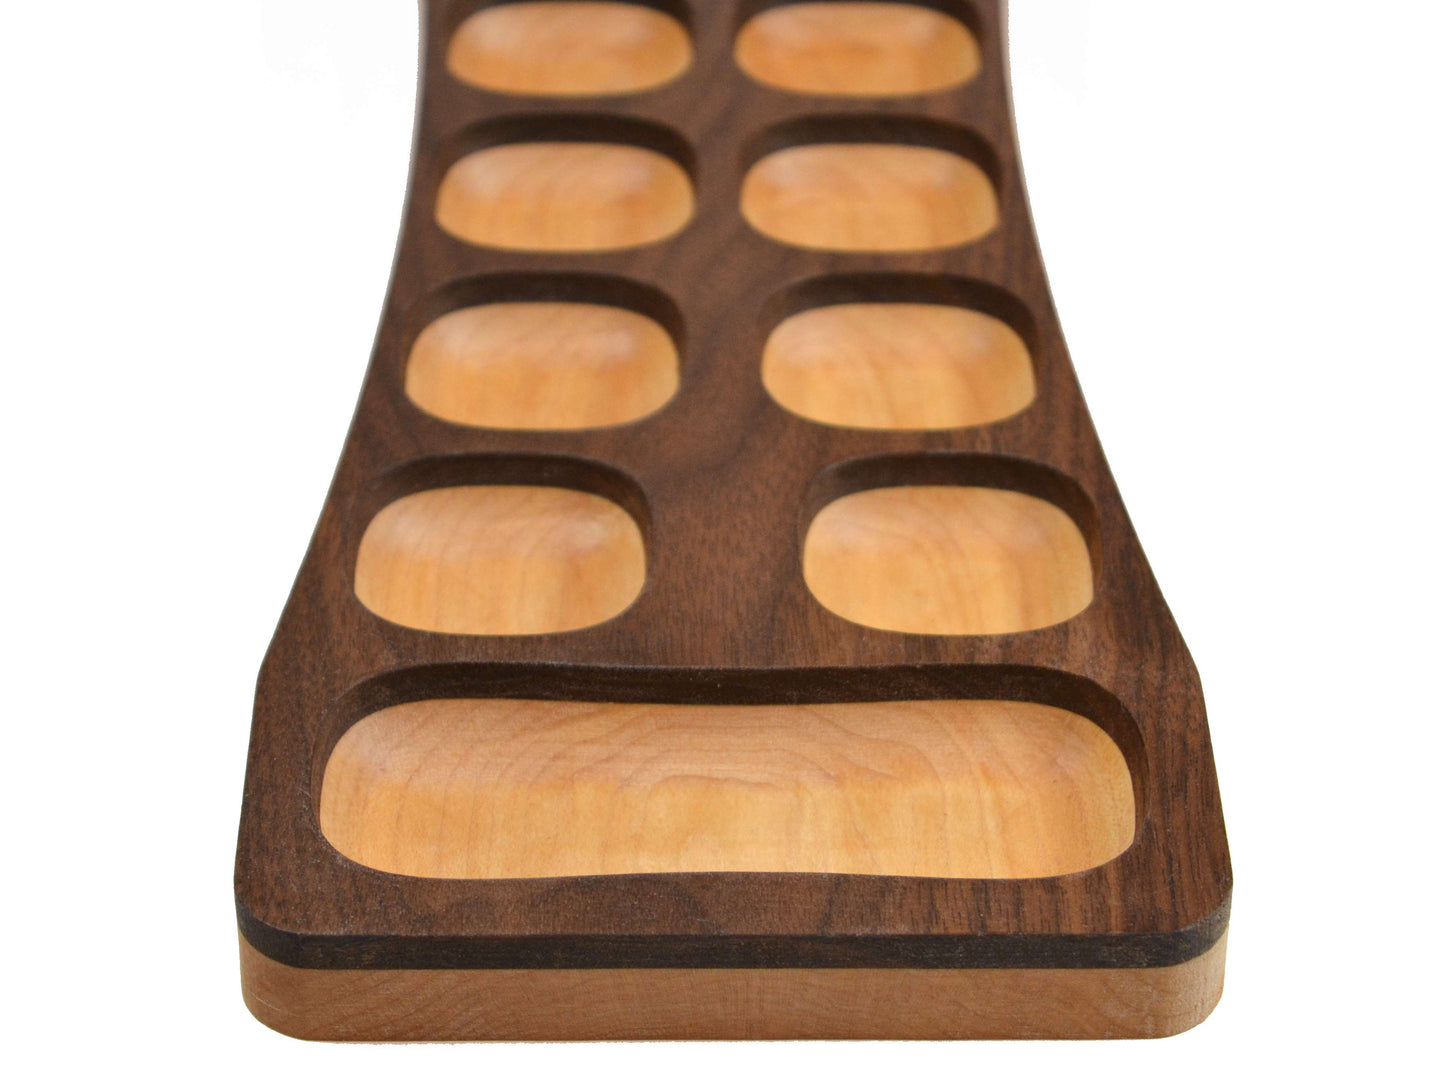 light wood mancala game board with dark layered top